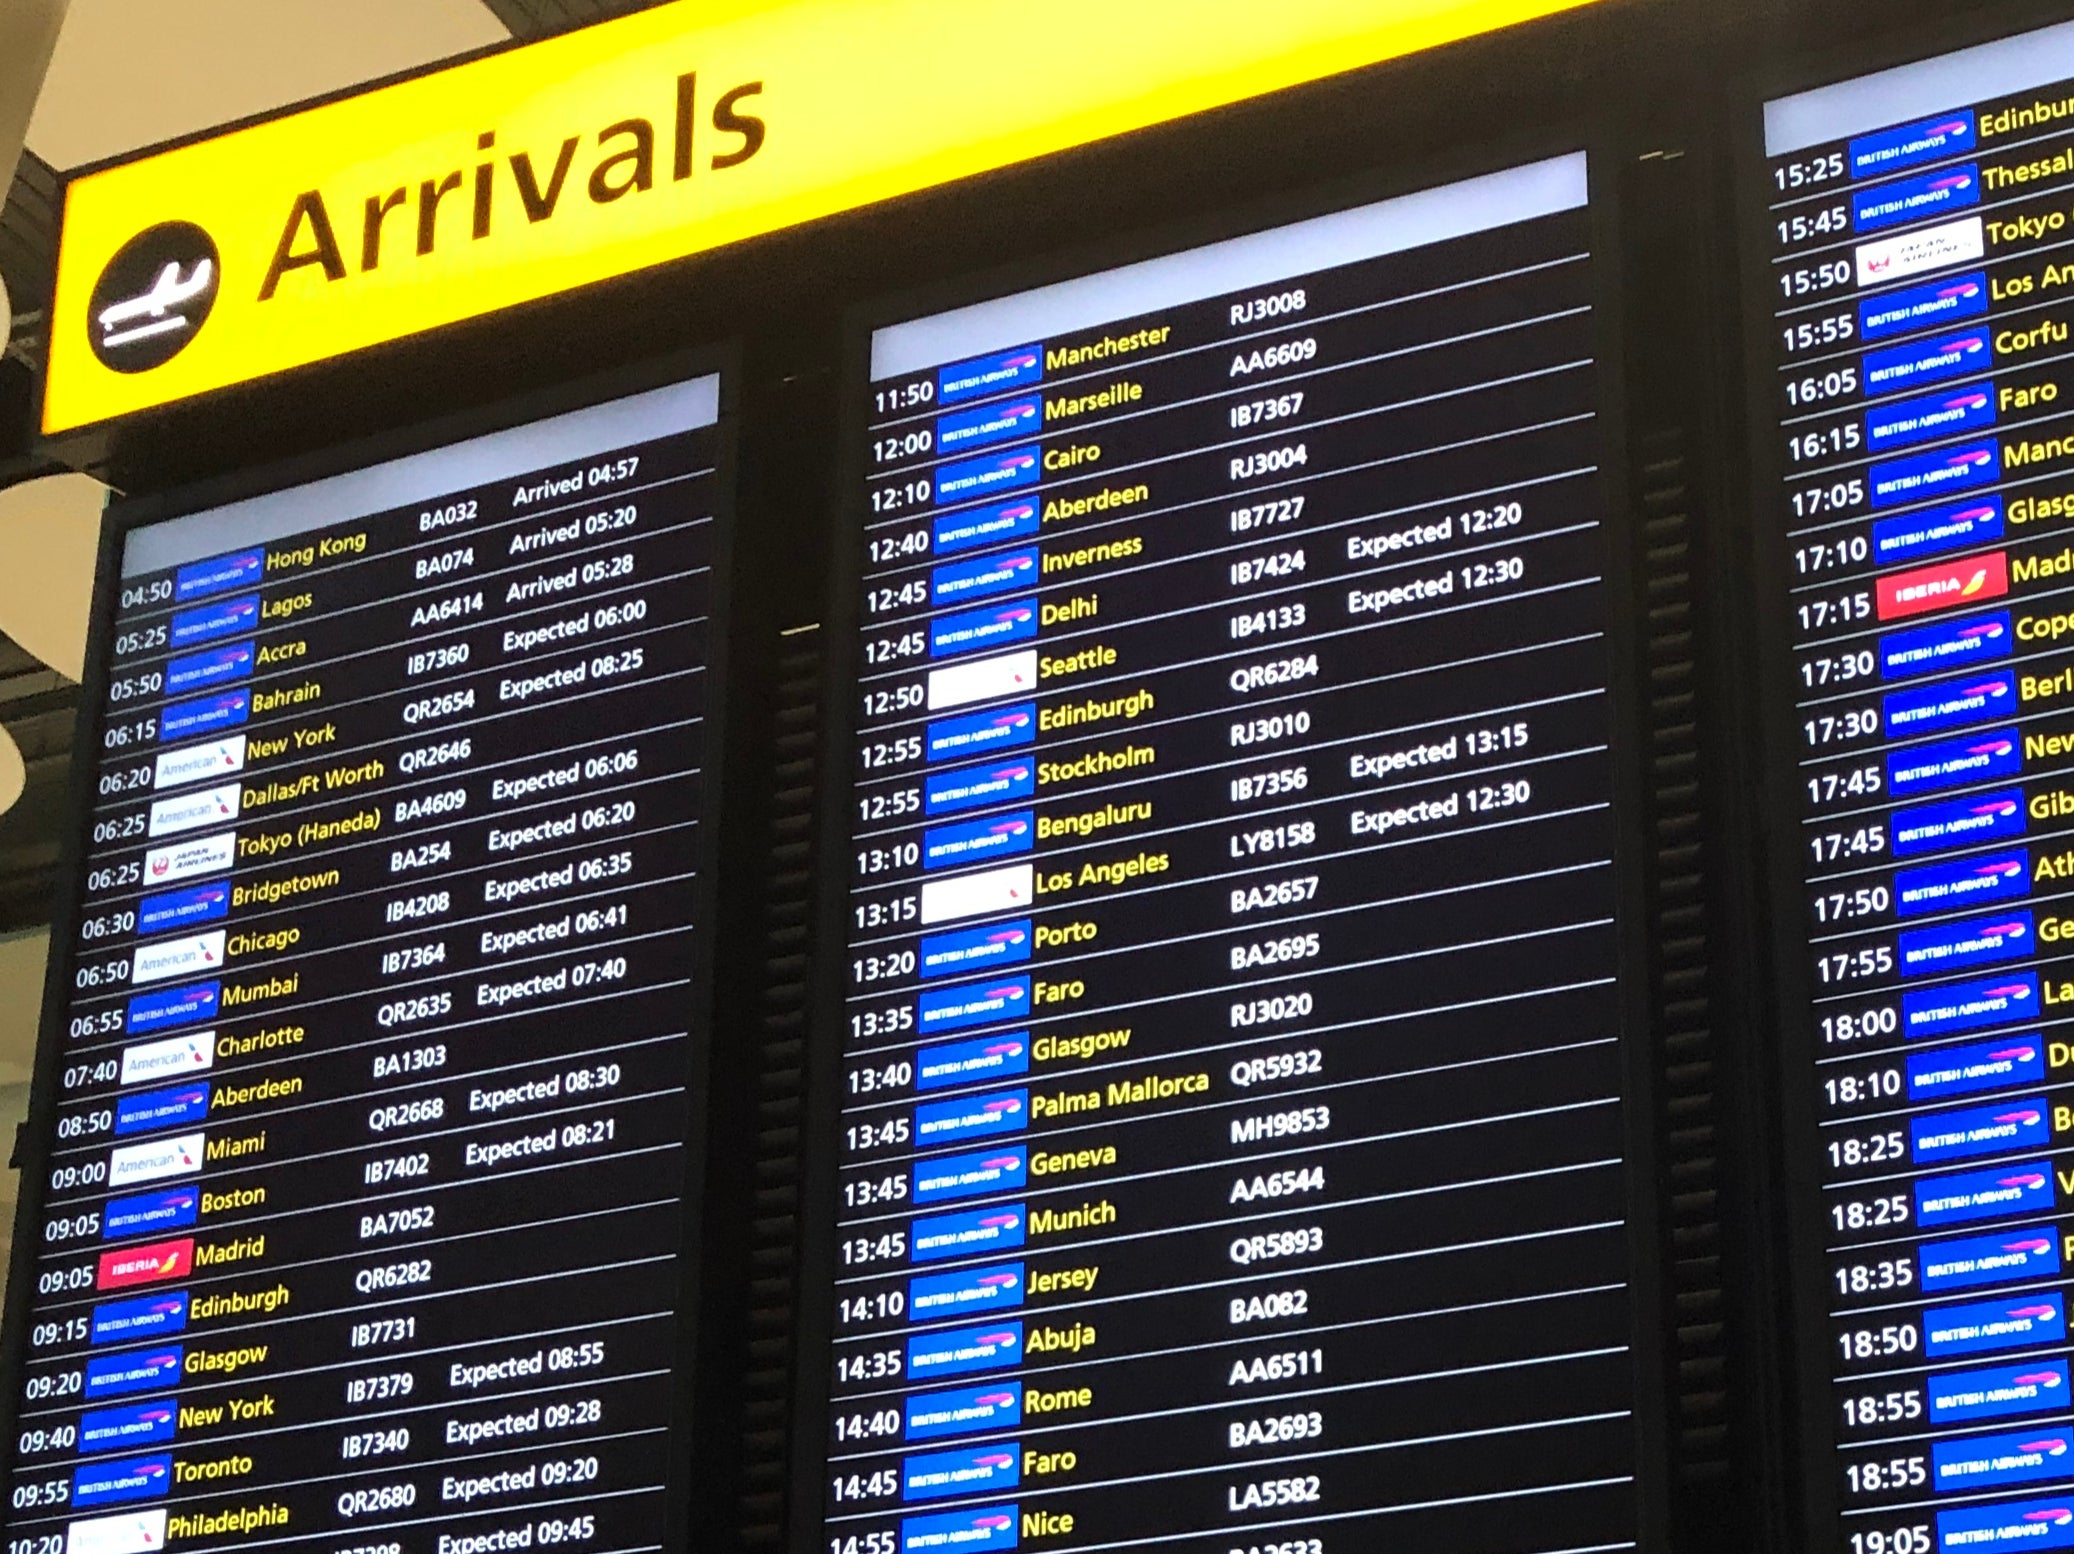 Arriving soon: Heathrow Terminal 5 arrivals on 30 May